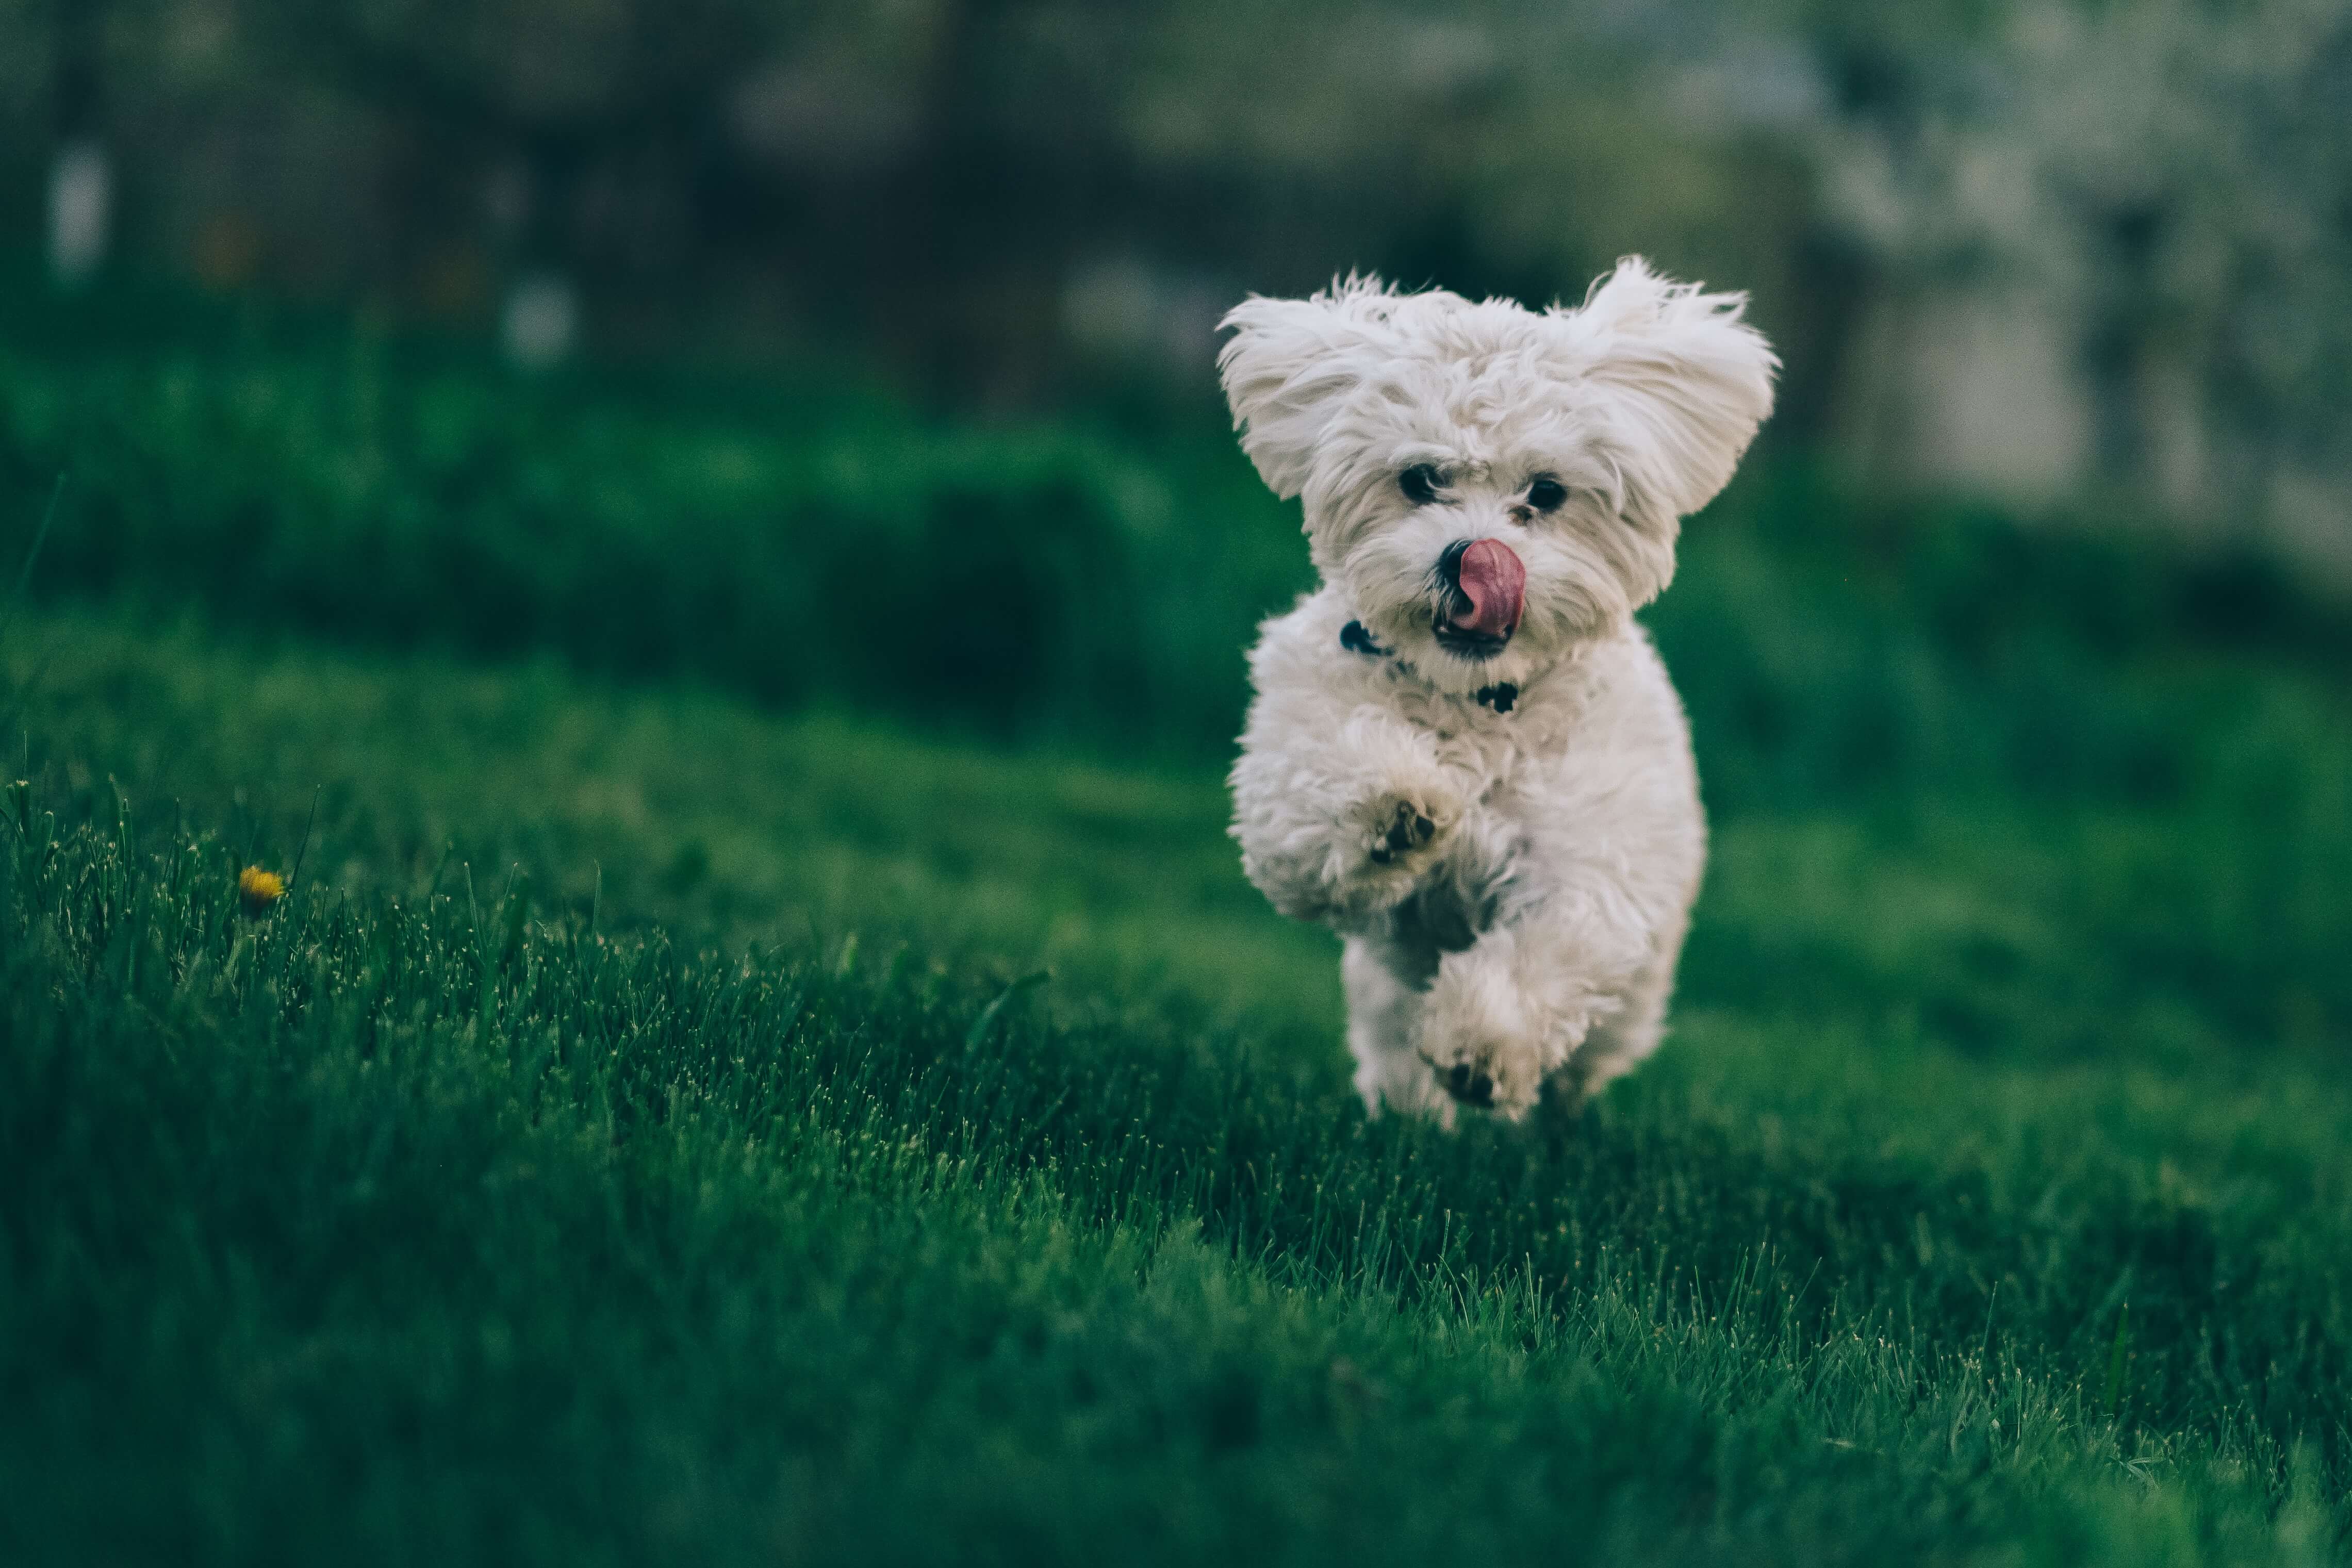 bichon frise dog running through green grass